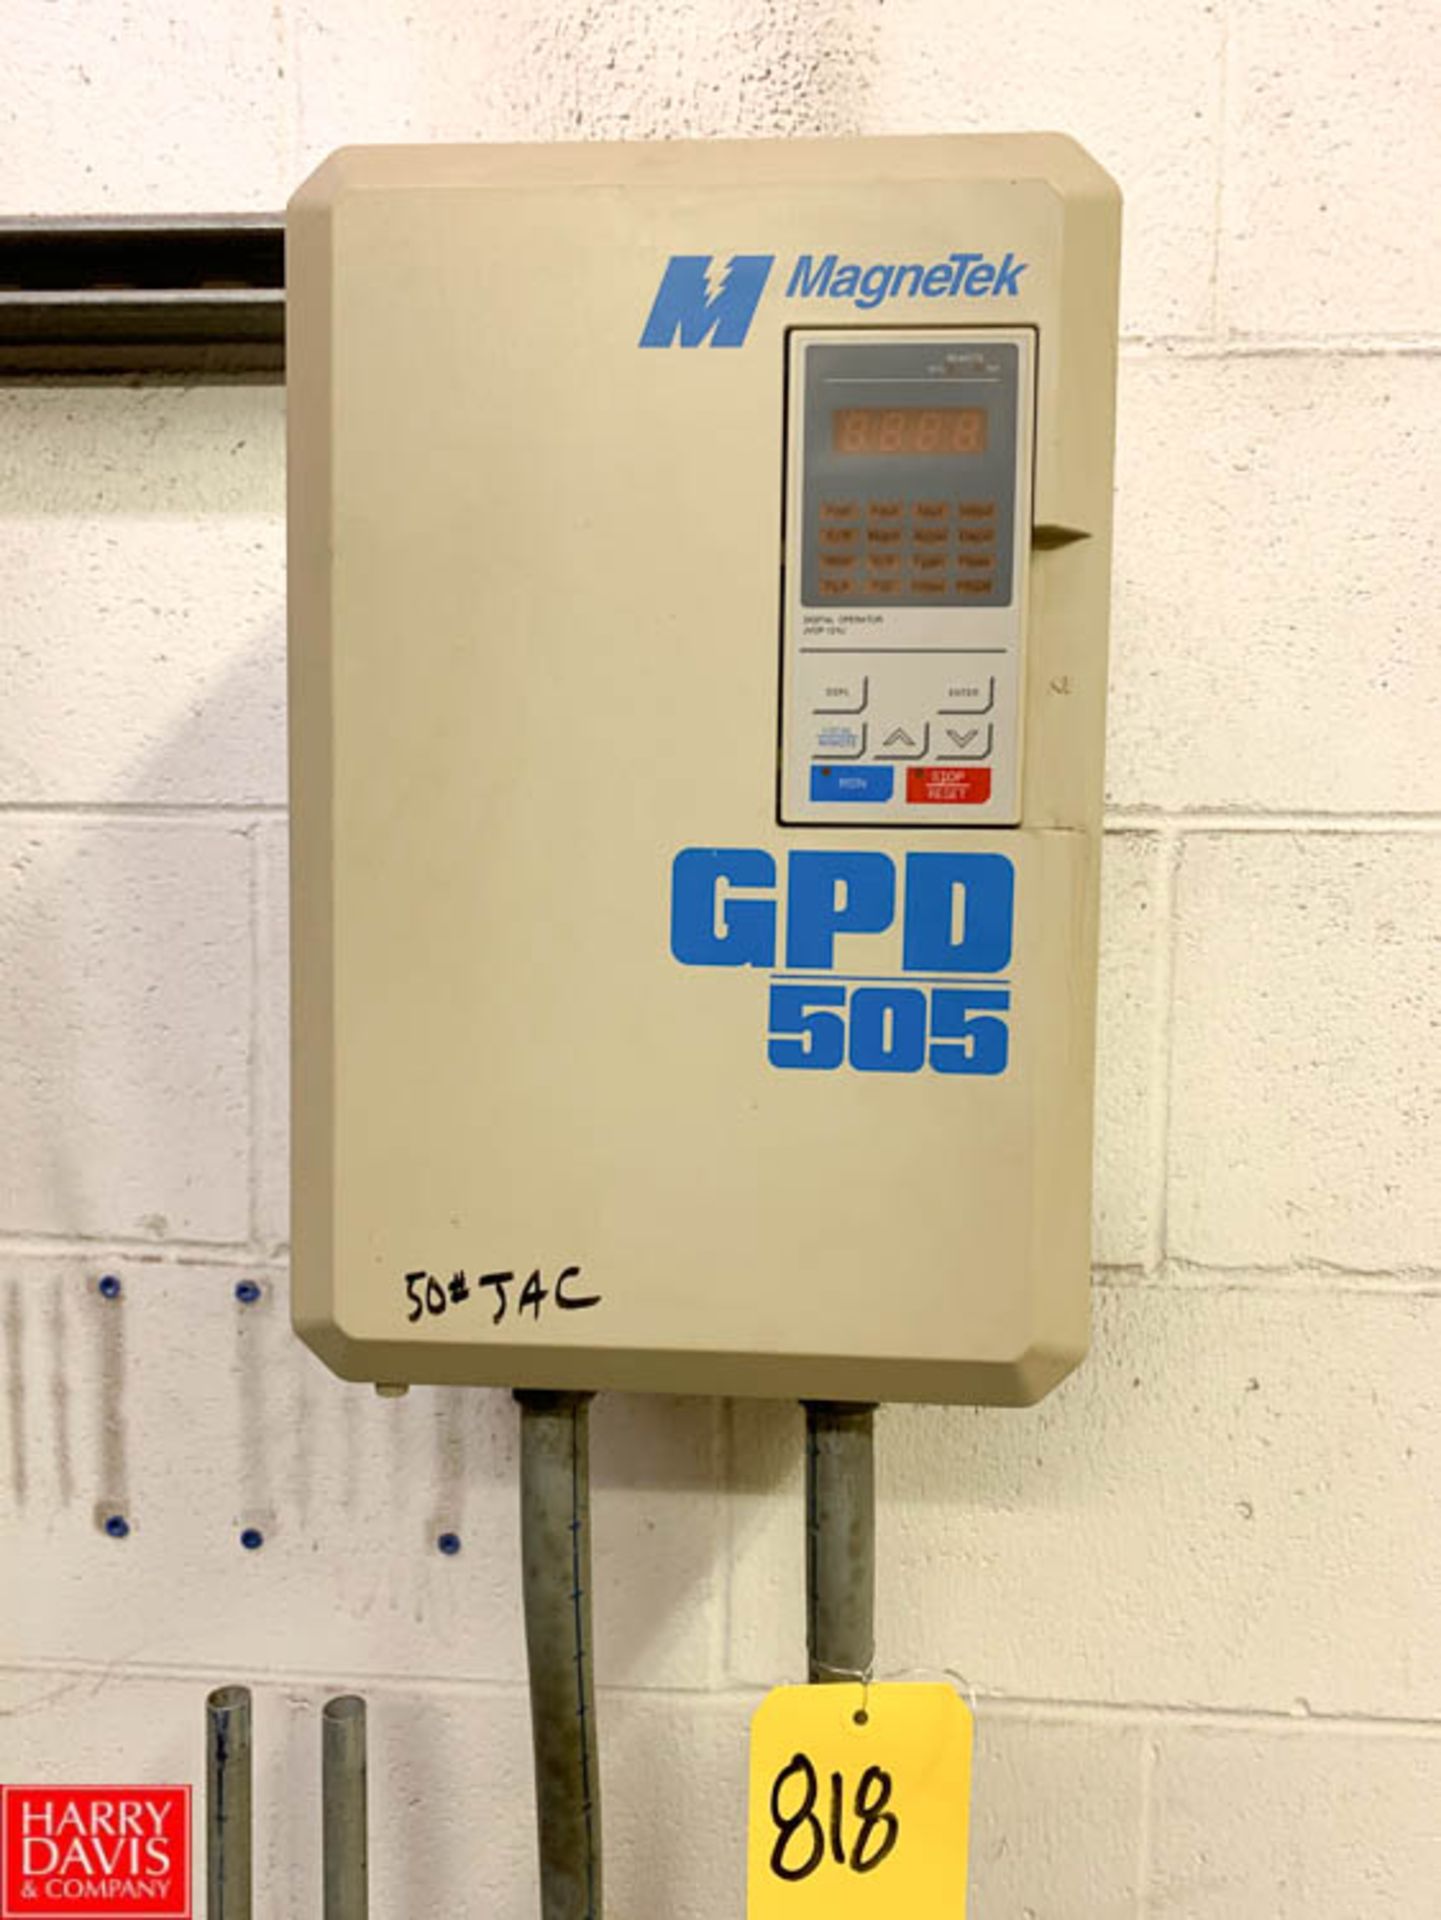 Magnetek Variable Frequency Drive Model GPD 505 - Rigging Fee: $ 75